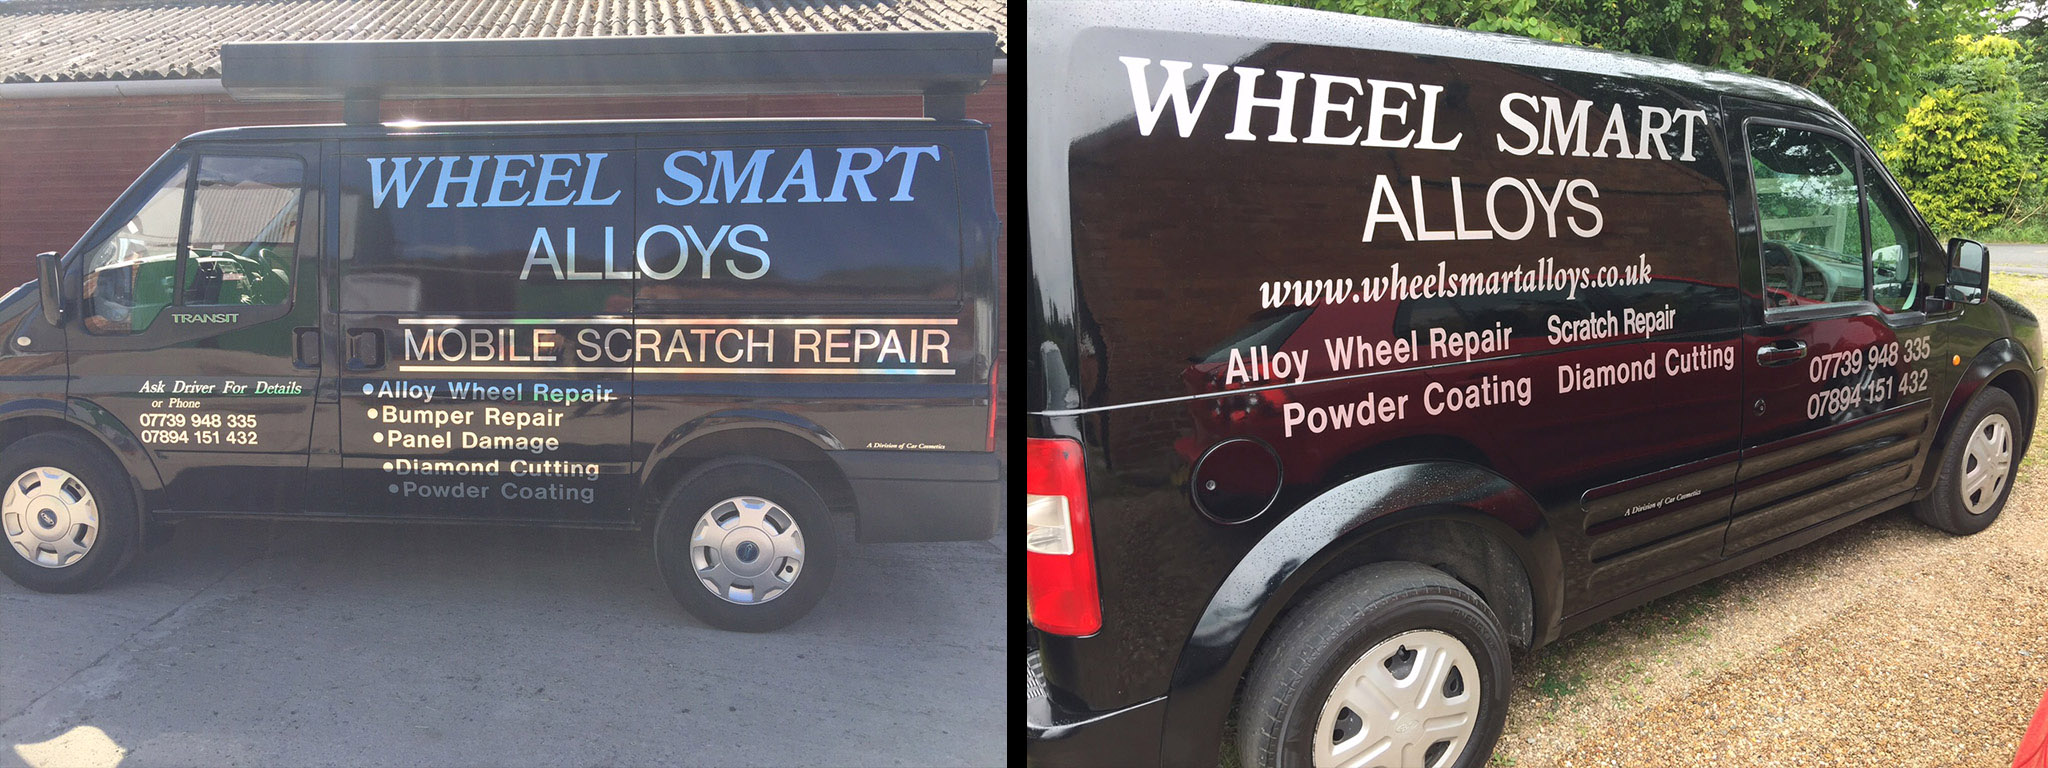 Wheel Smart Alloys Bromsgrove